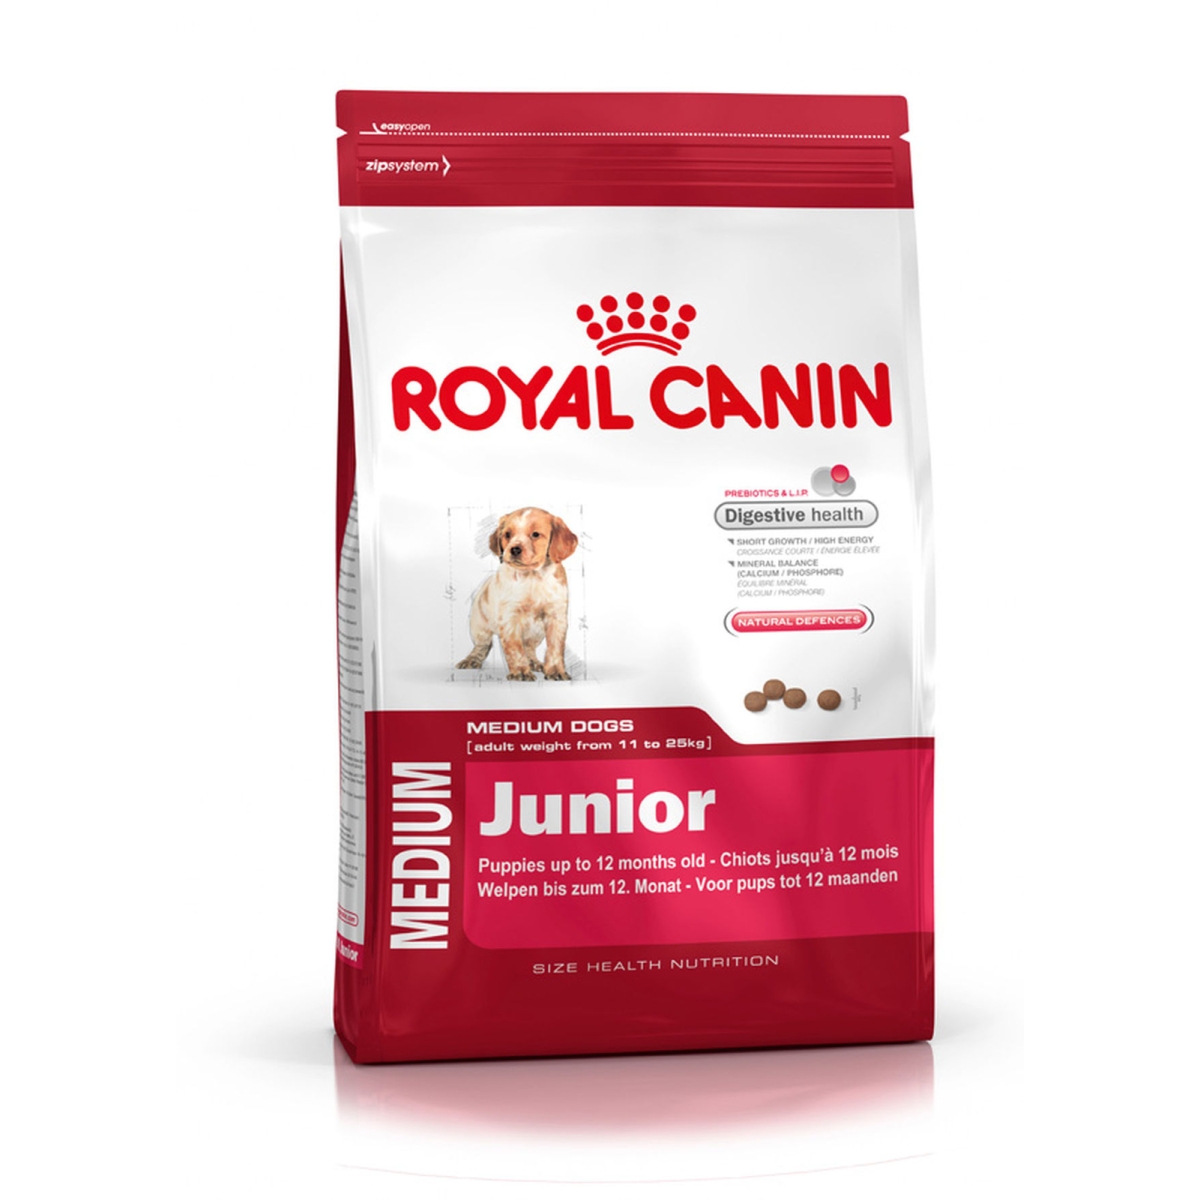 Royal Canin koeratoit keskmist kasvu kutsikatele 1 kg